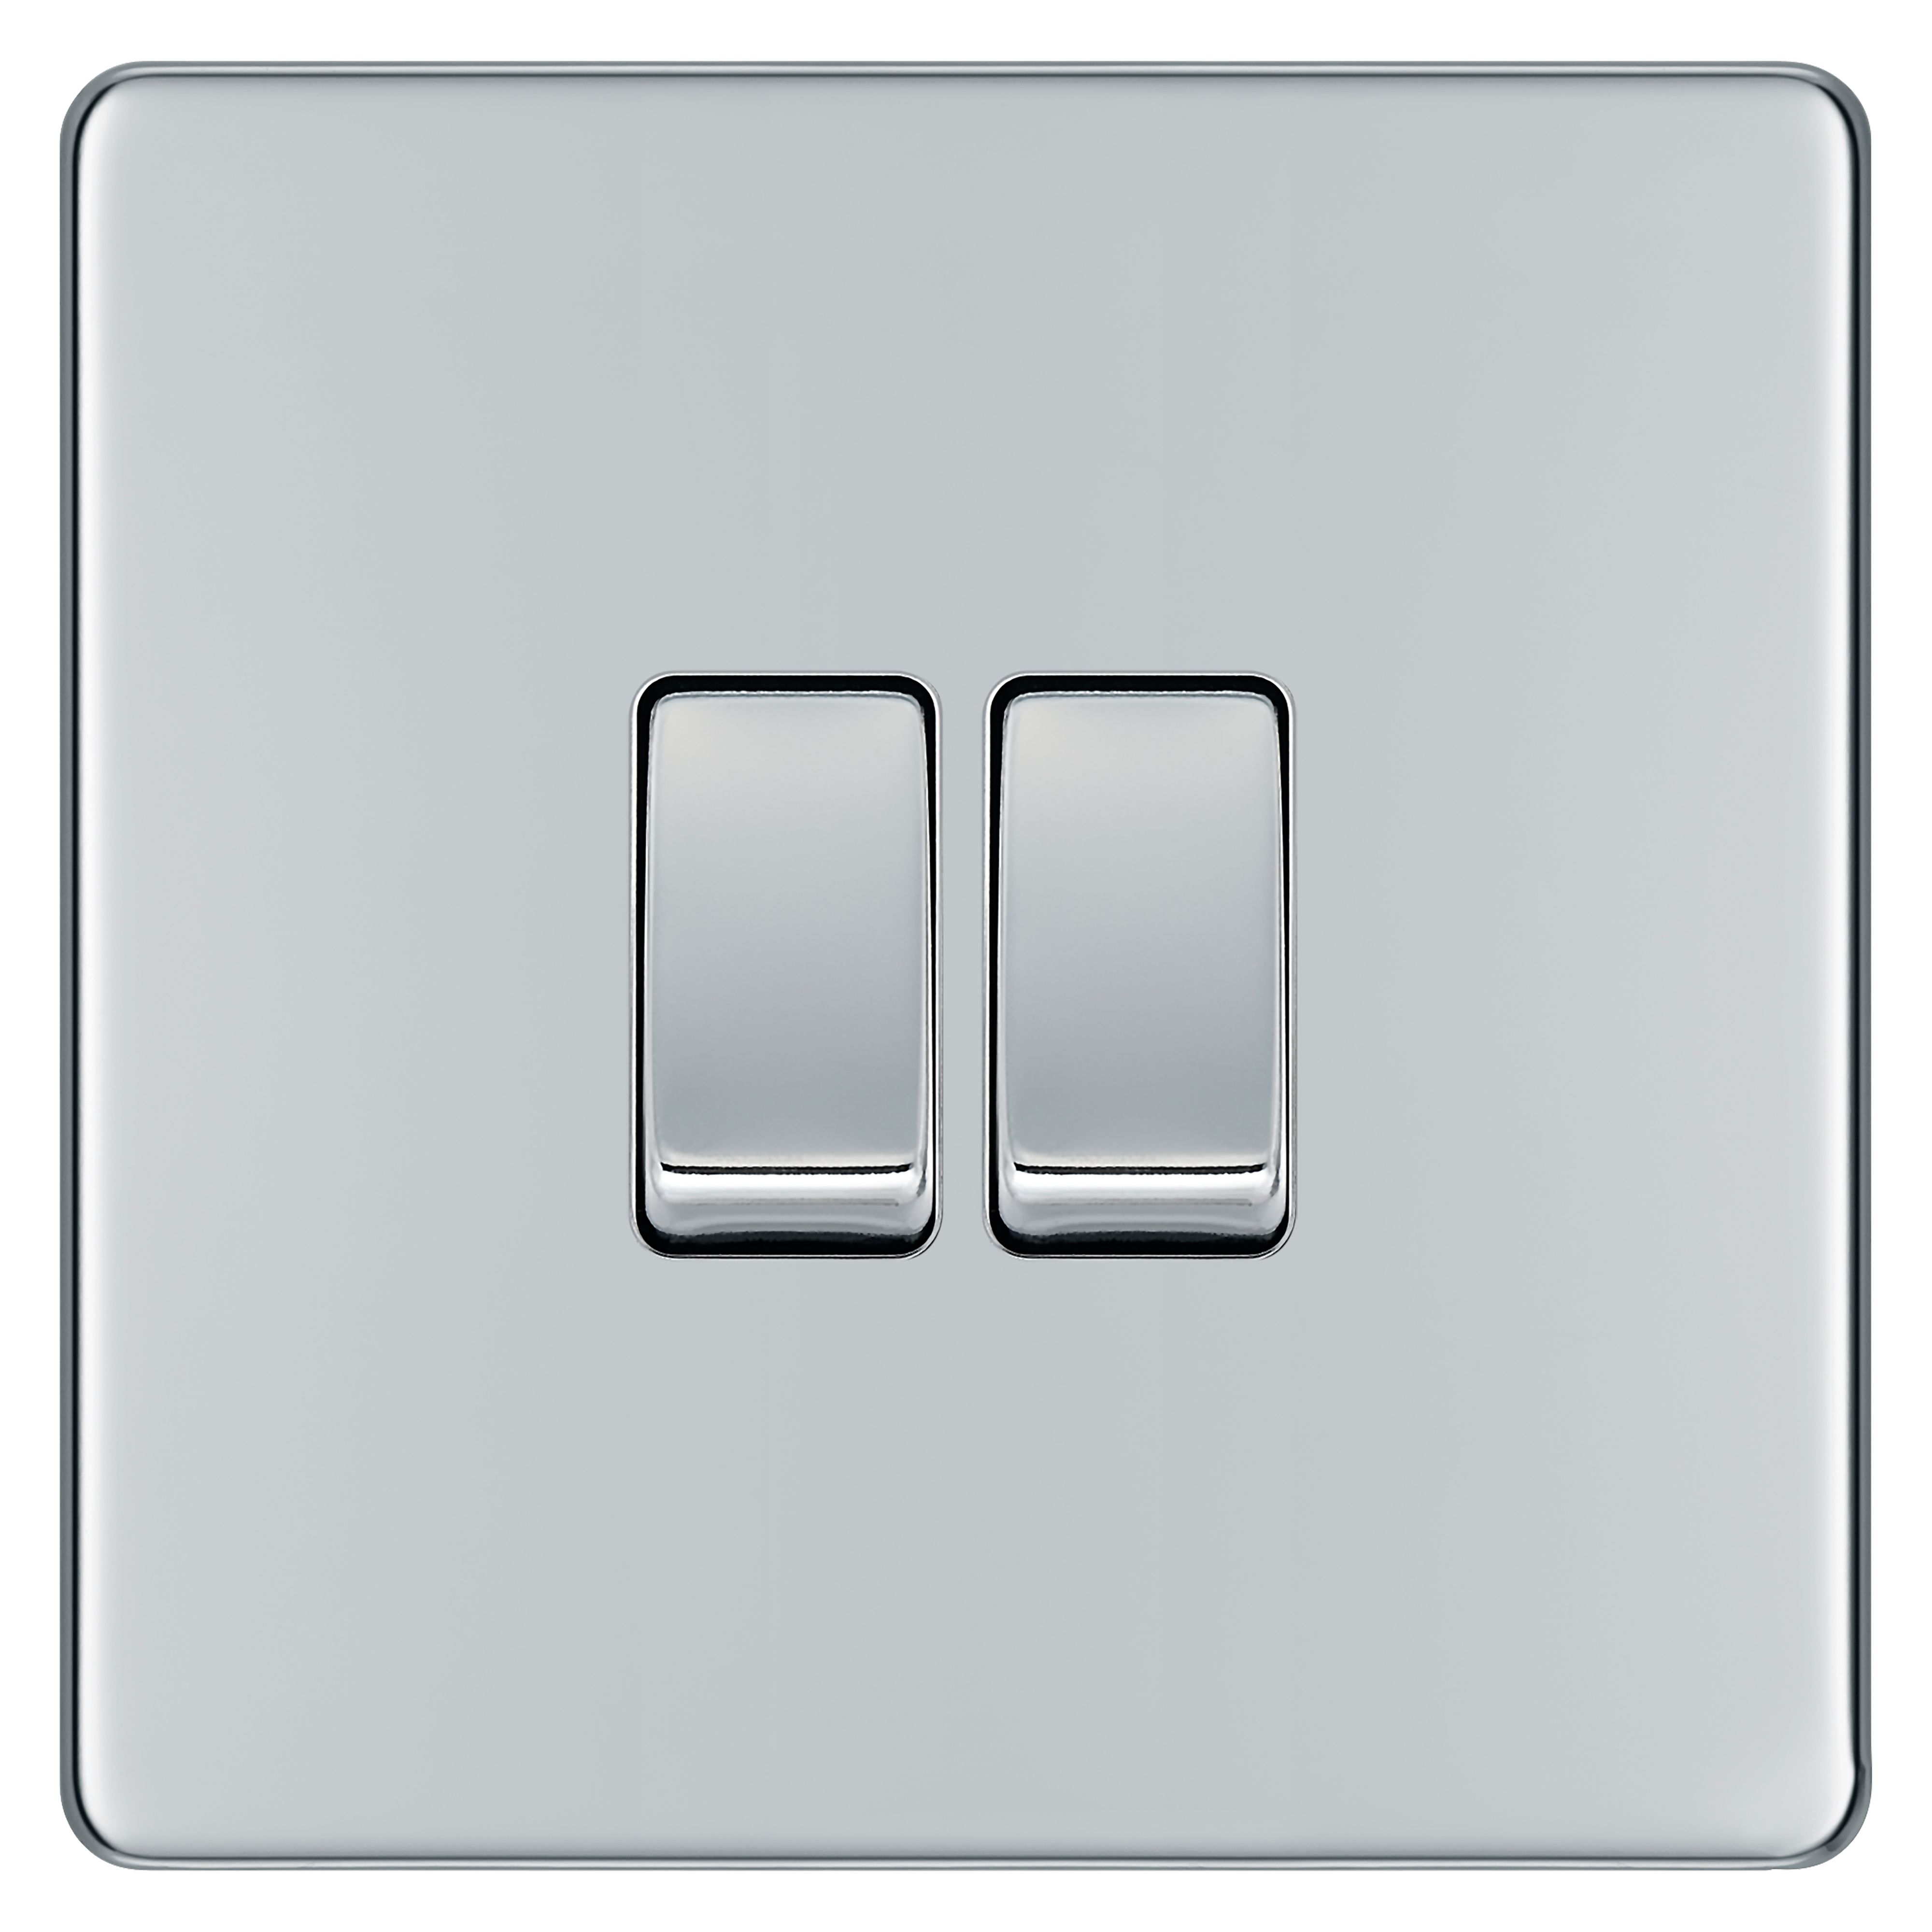 Image of BG 10Ax Screwless Flat Plate Double Switch 2 Way - Polished Chrome